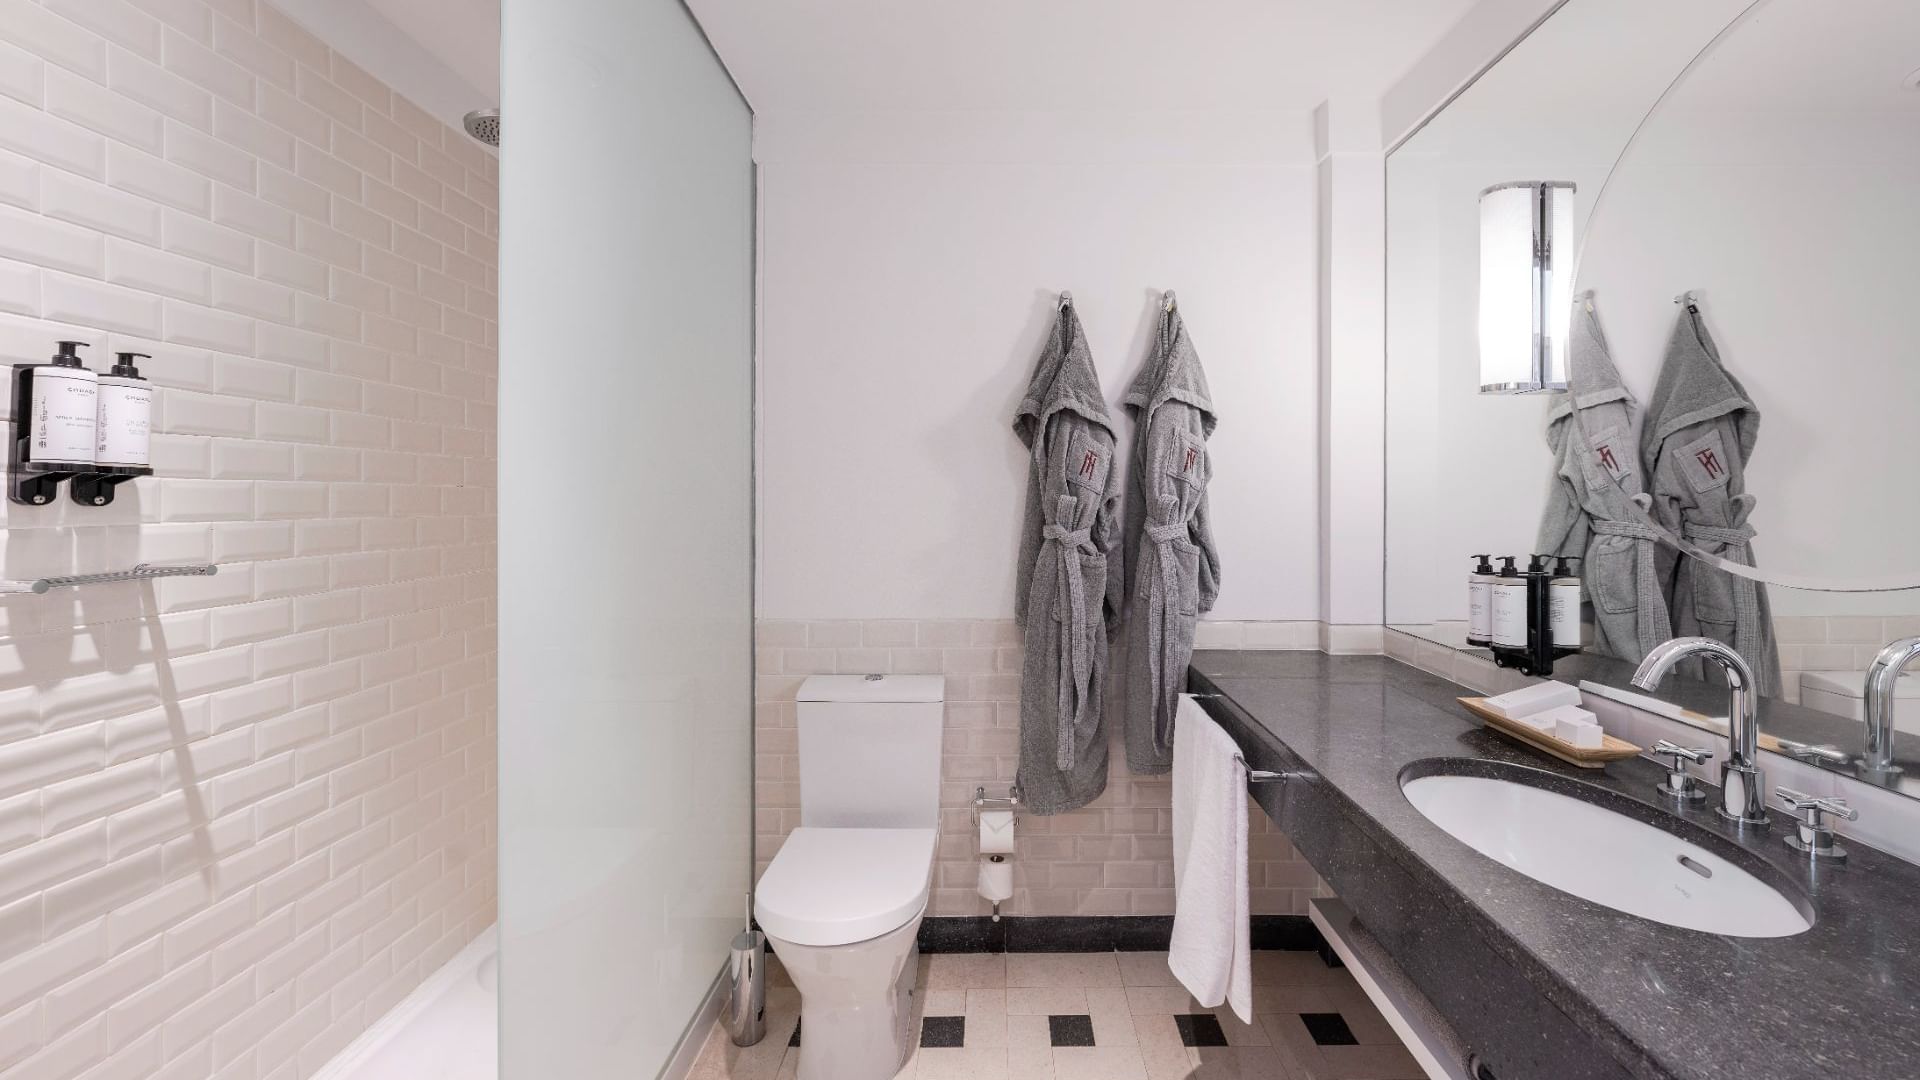 Bathroom Vanity & bathrobes in a Room at Bensaude Hotels